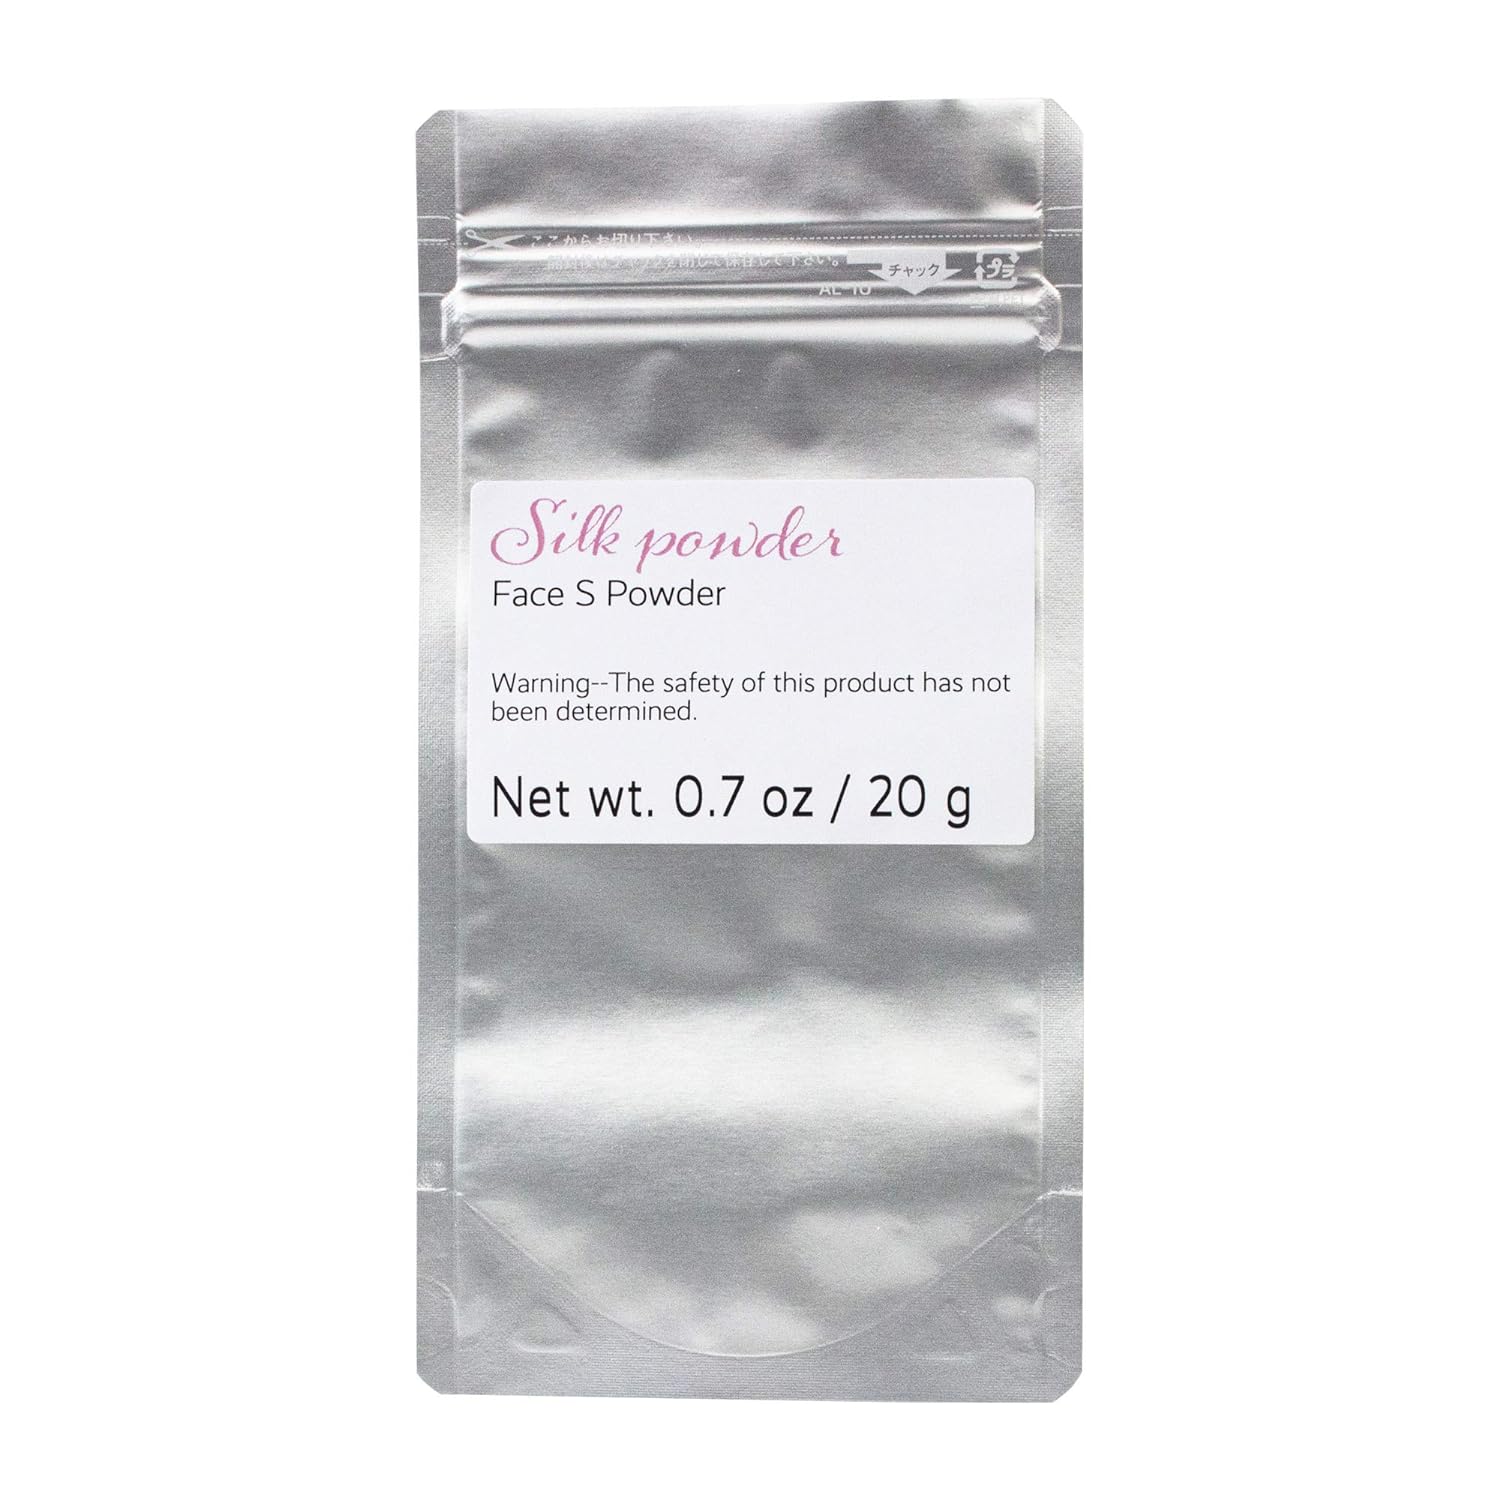  Natural Cosmetics Laboratory Face S Powder 100% Silk Powder from Japan 0.7 oz / 20 g Refill